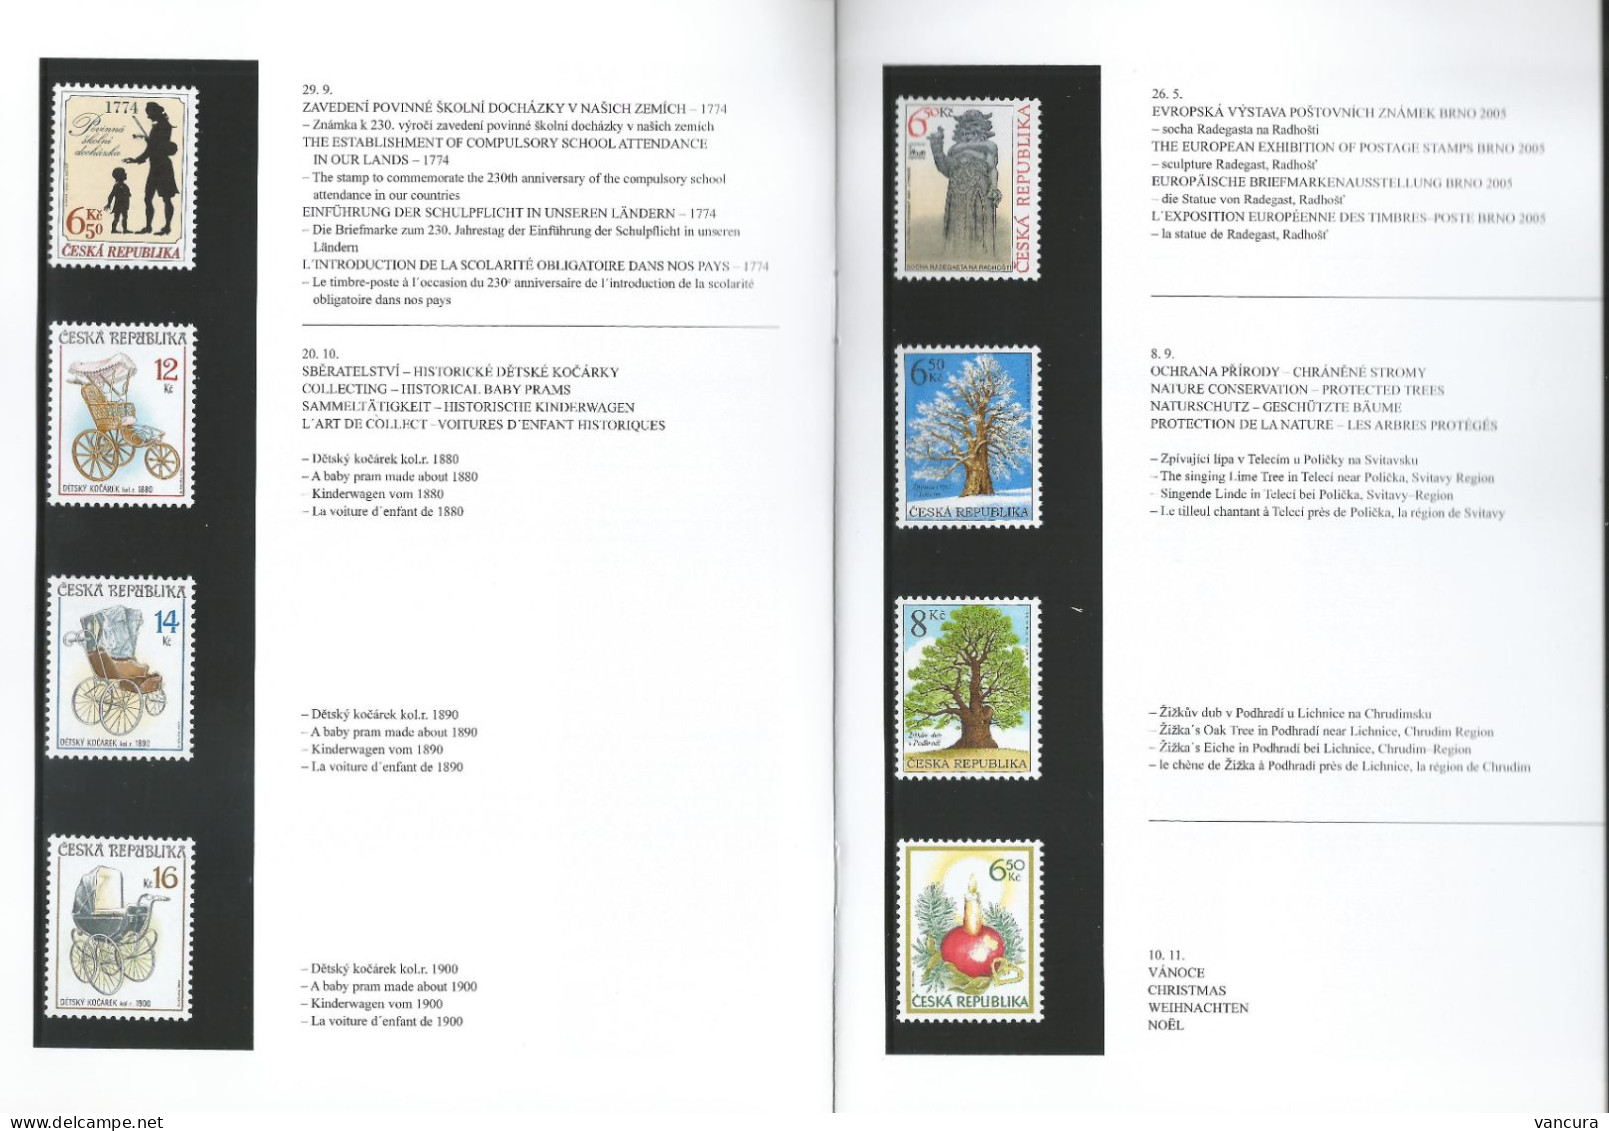 Czech Republic Year Book 2004 (with Blackprint) - Années Complètes